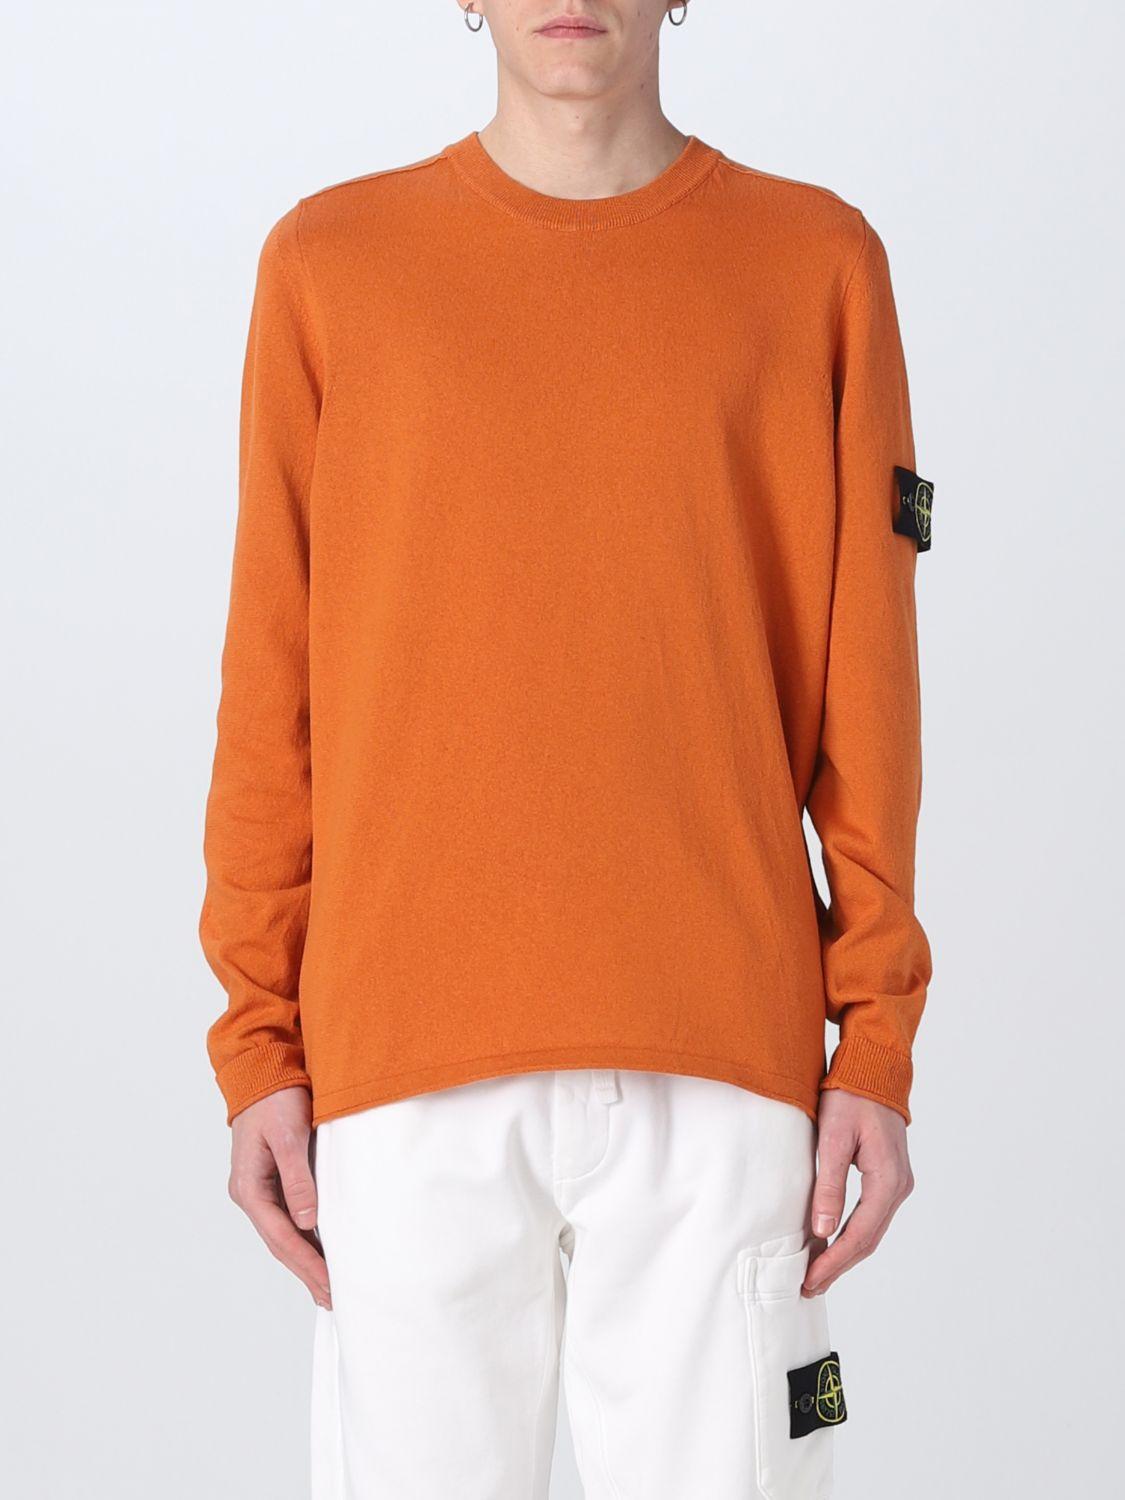 Stone Island Sweater in Orange for Men | Lyst